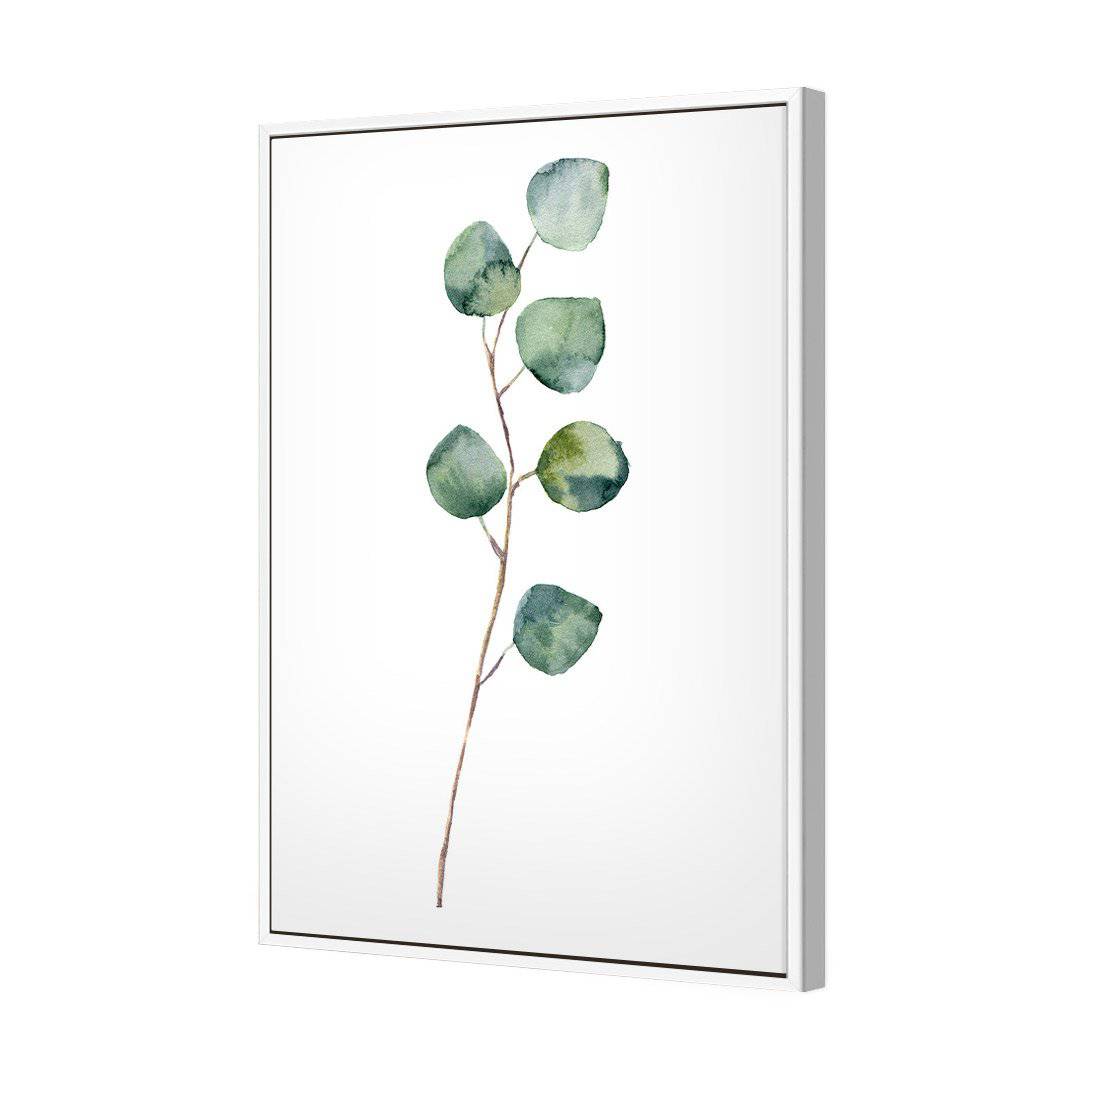 Fragrant Herb 3 Canvas Art-Canvas-Wall Art Designs-45x30cm-Canvas - White Frame-Wall Art Designs